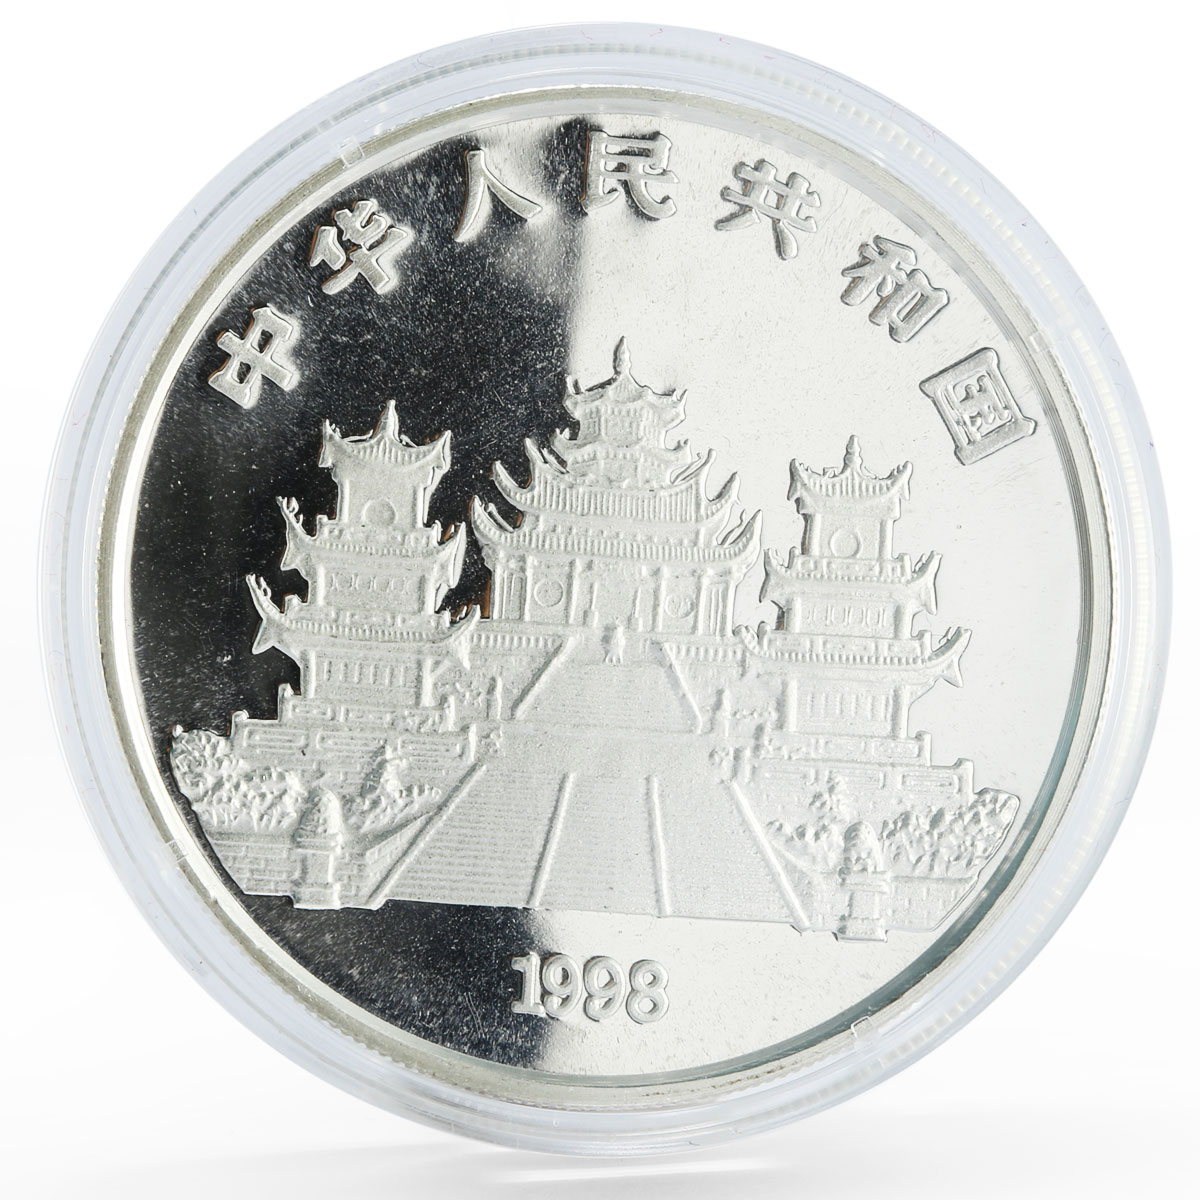 China 10 yuan Goddess of Mazu proof silver coin 1998